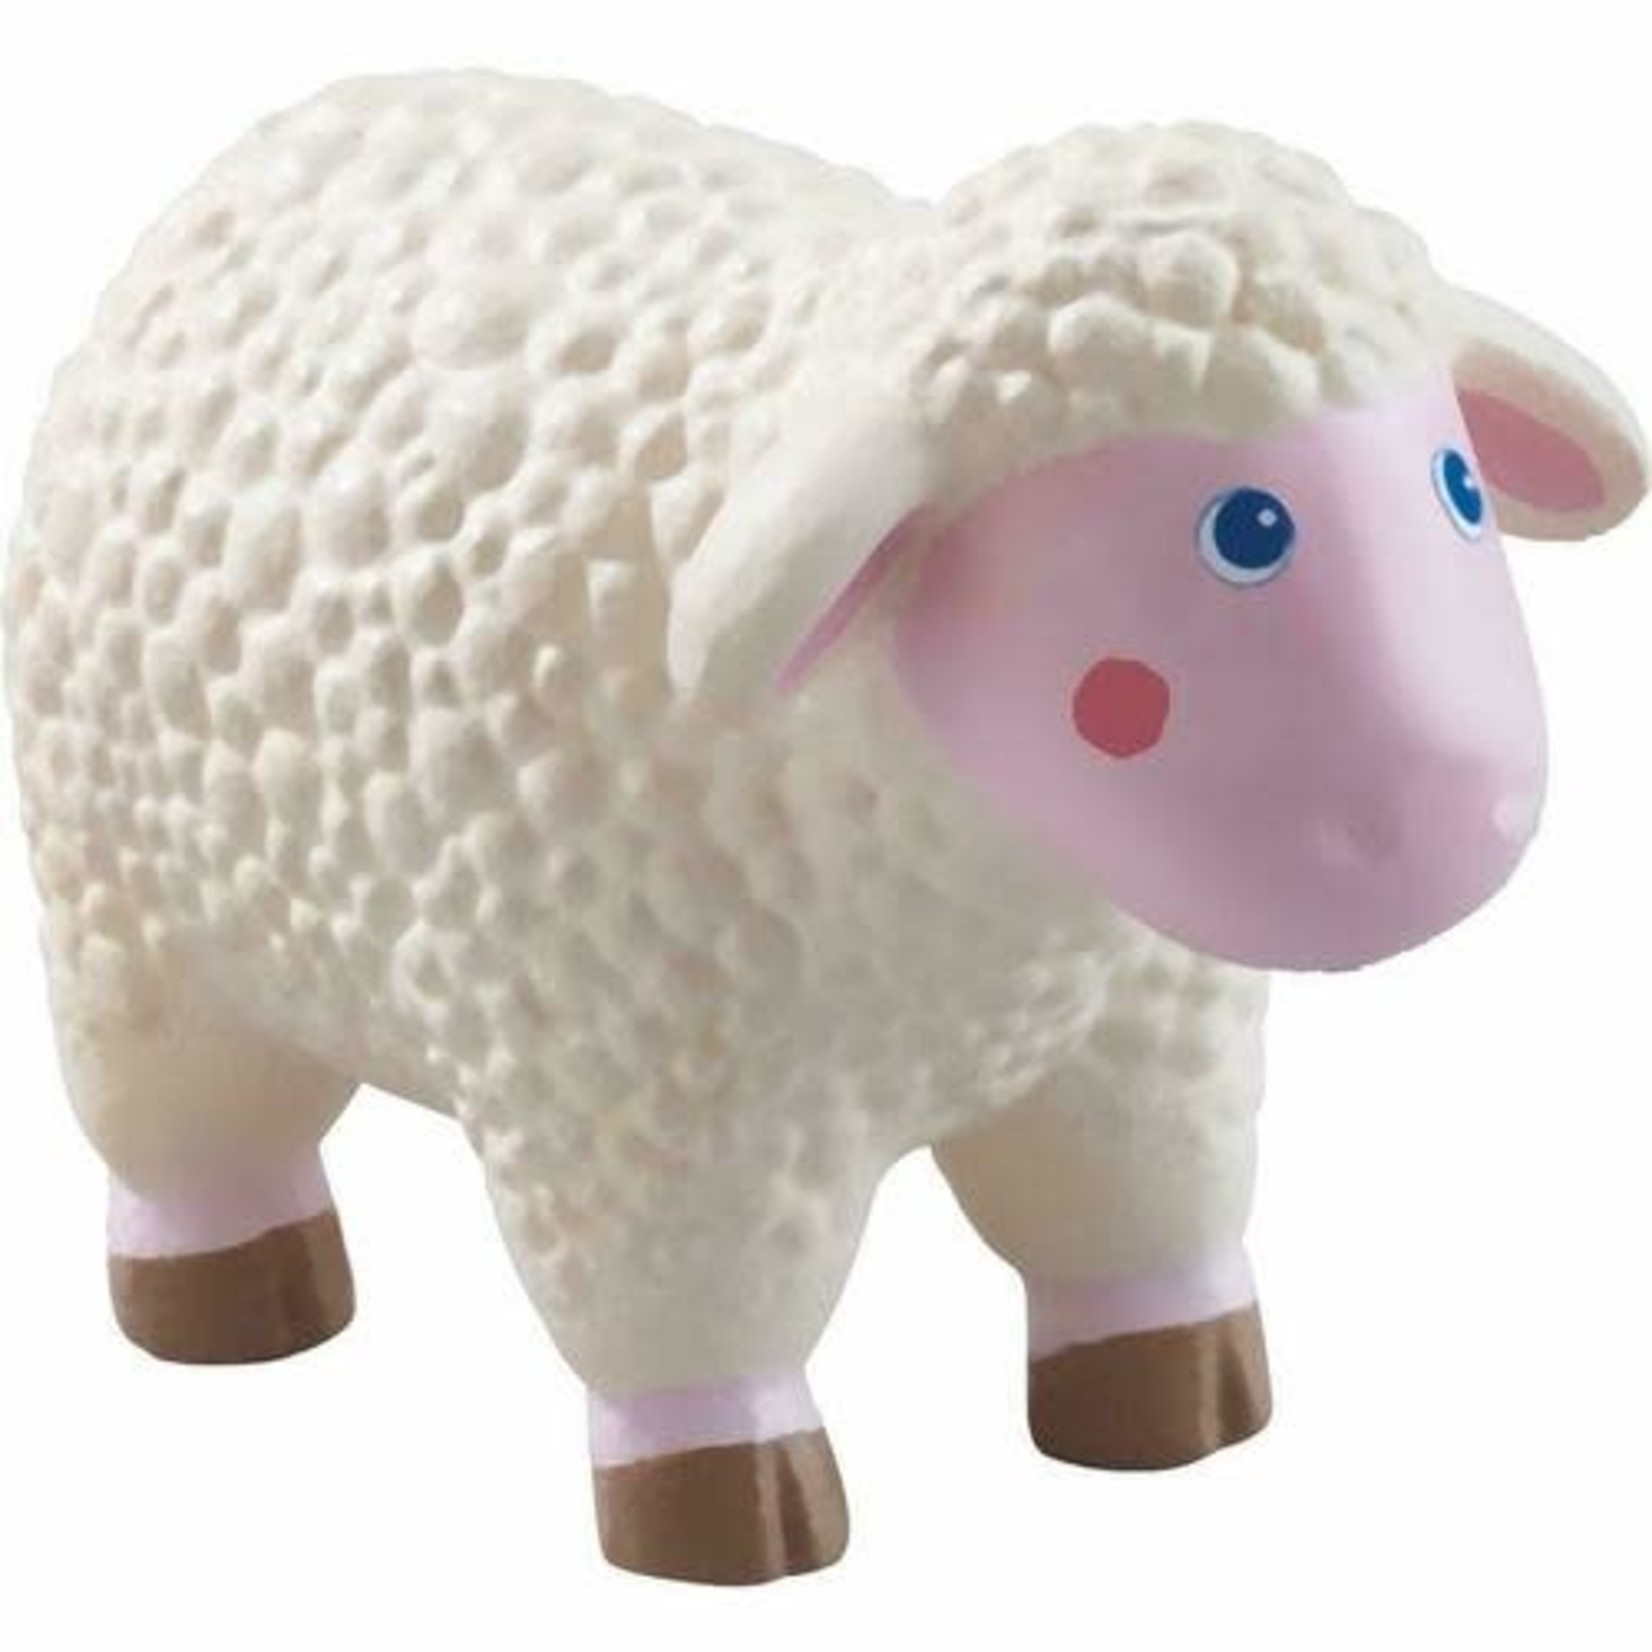 Haba Little Friends - White Sheep